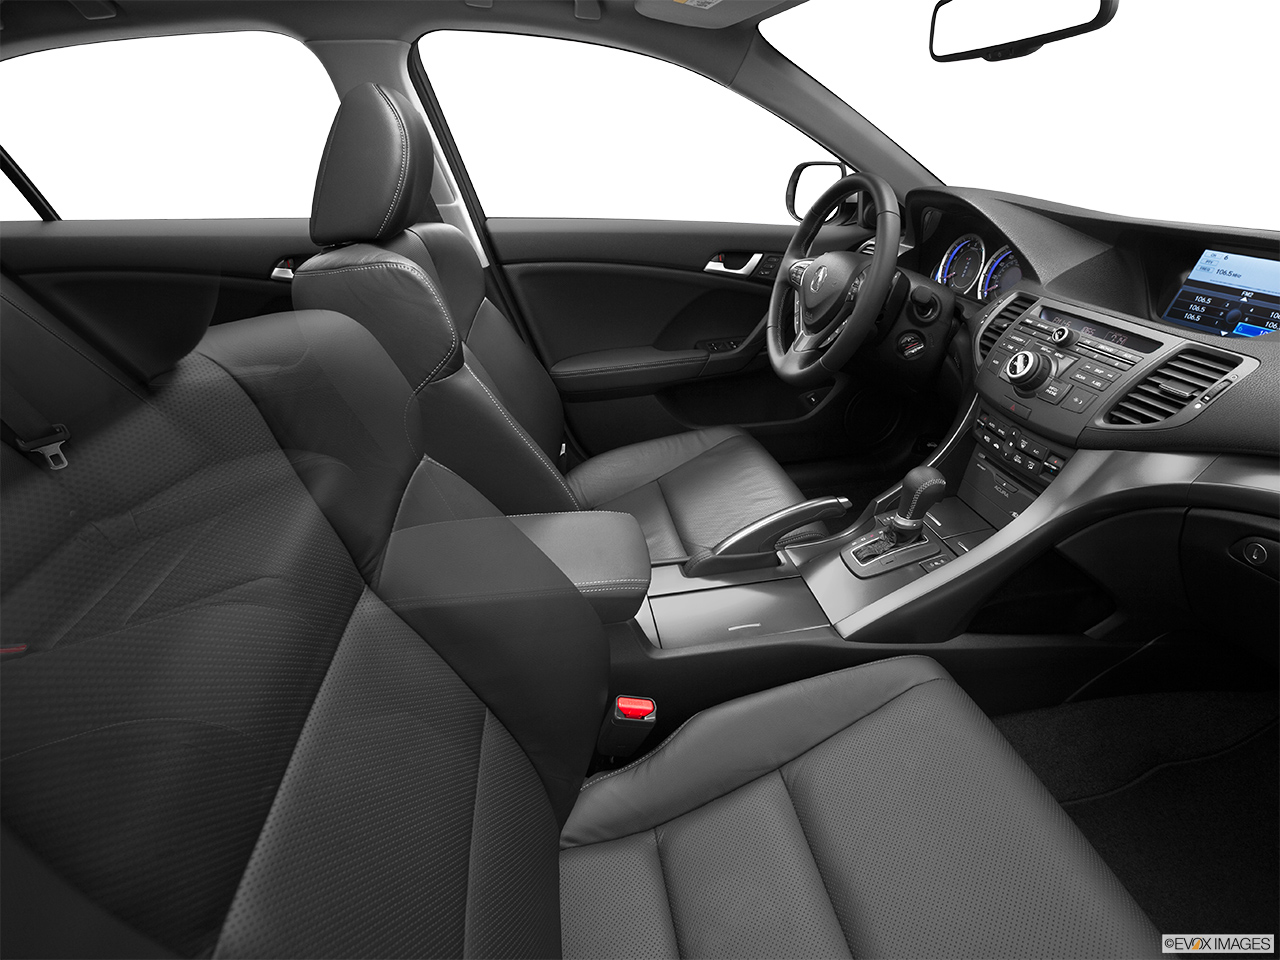 2013 Acura TSX 5-Speed Automatic Fake Buck Shot - Interior from Passenger B pillar. 